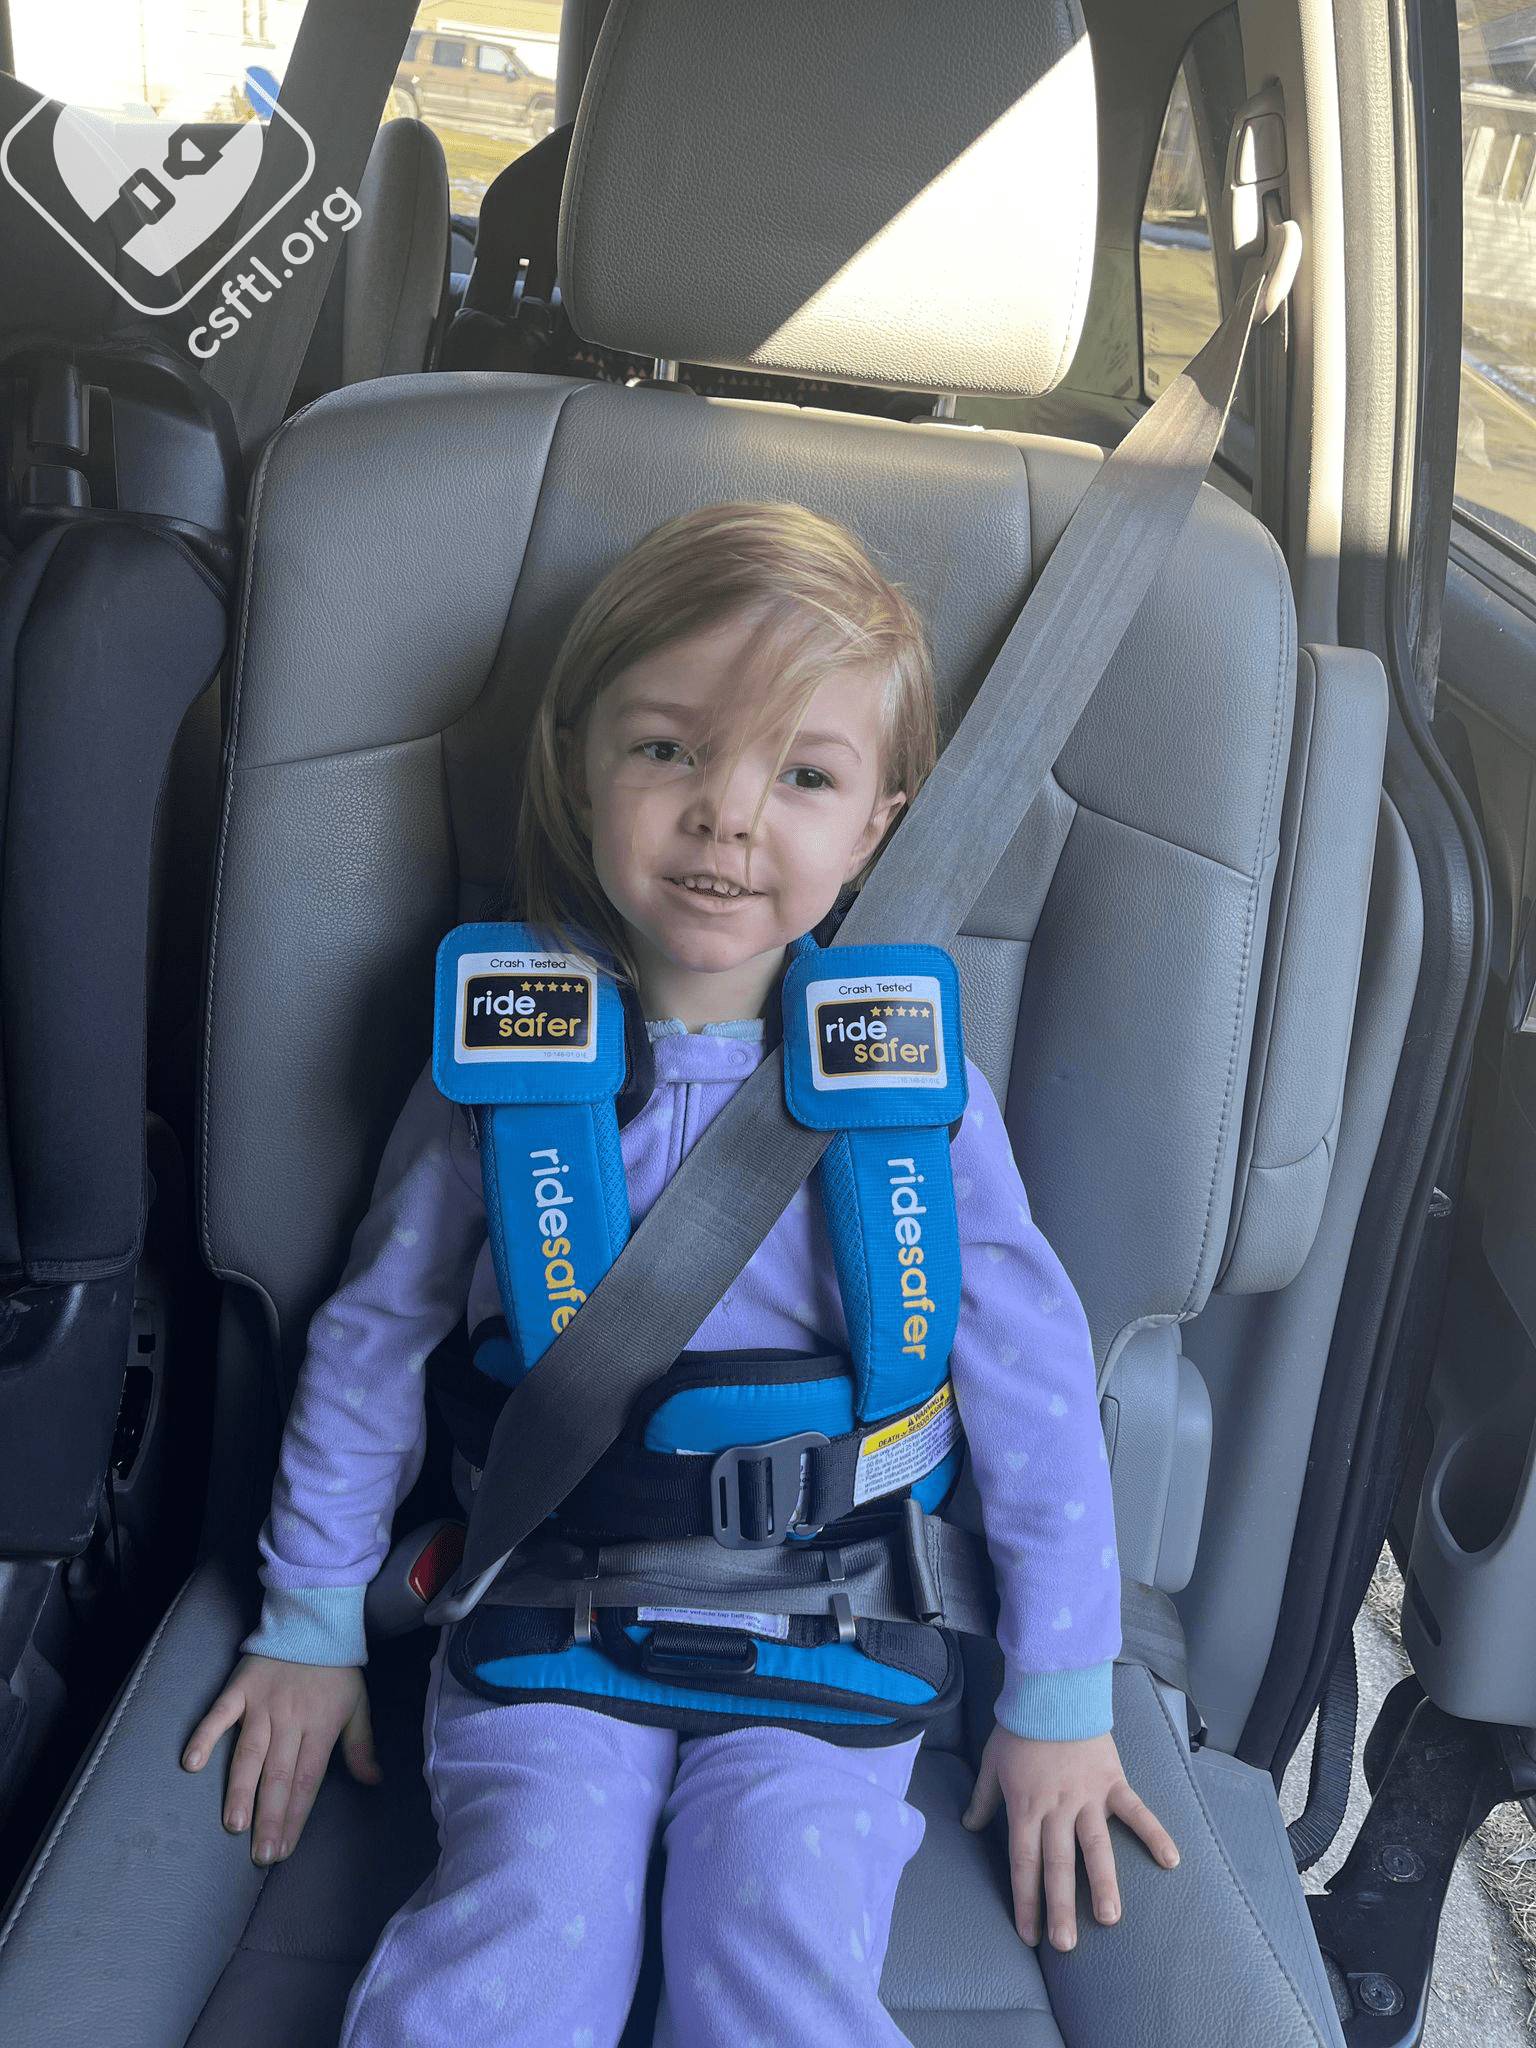 RideSafer Vest | Travel Car Seat (Generation 5)